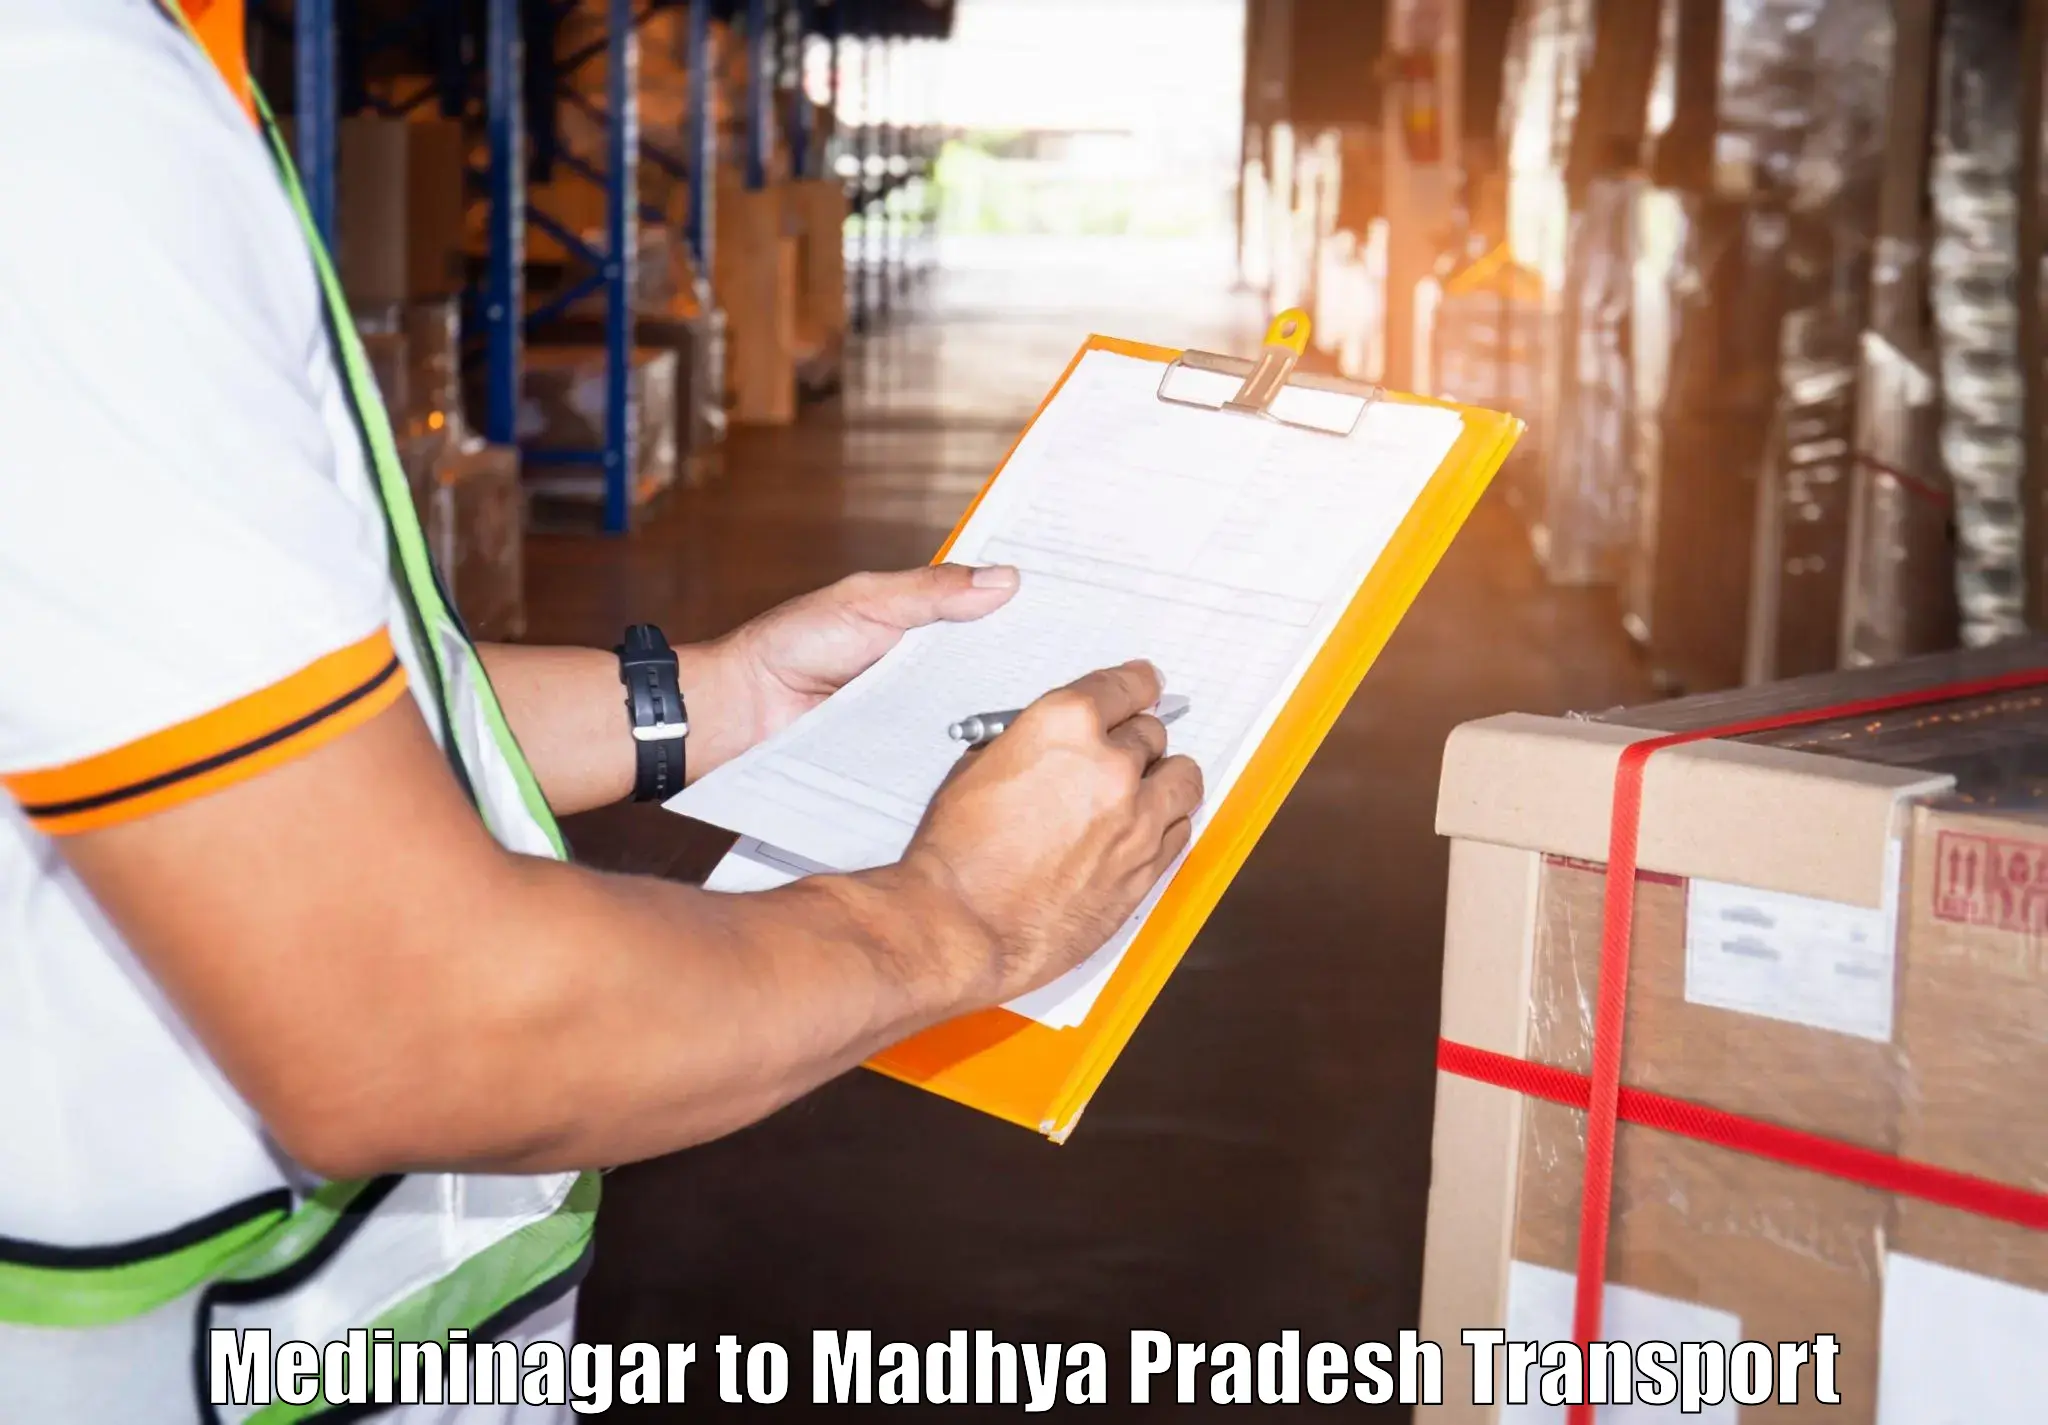 Truck transport companies in India Medininagar to Gwalior